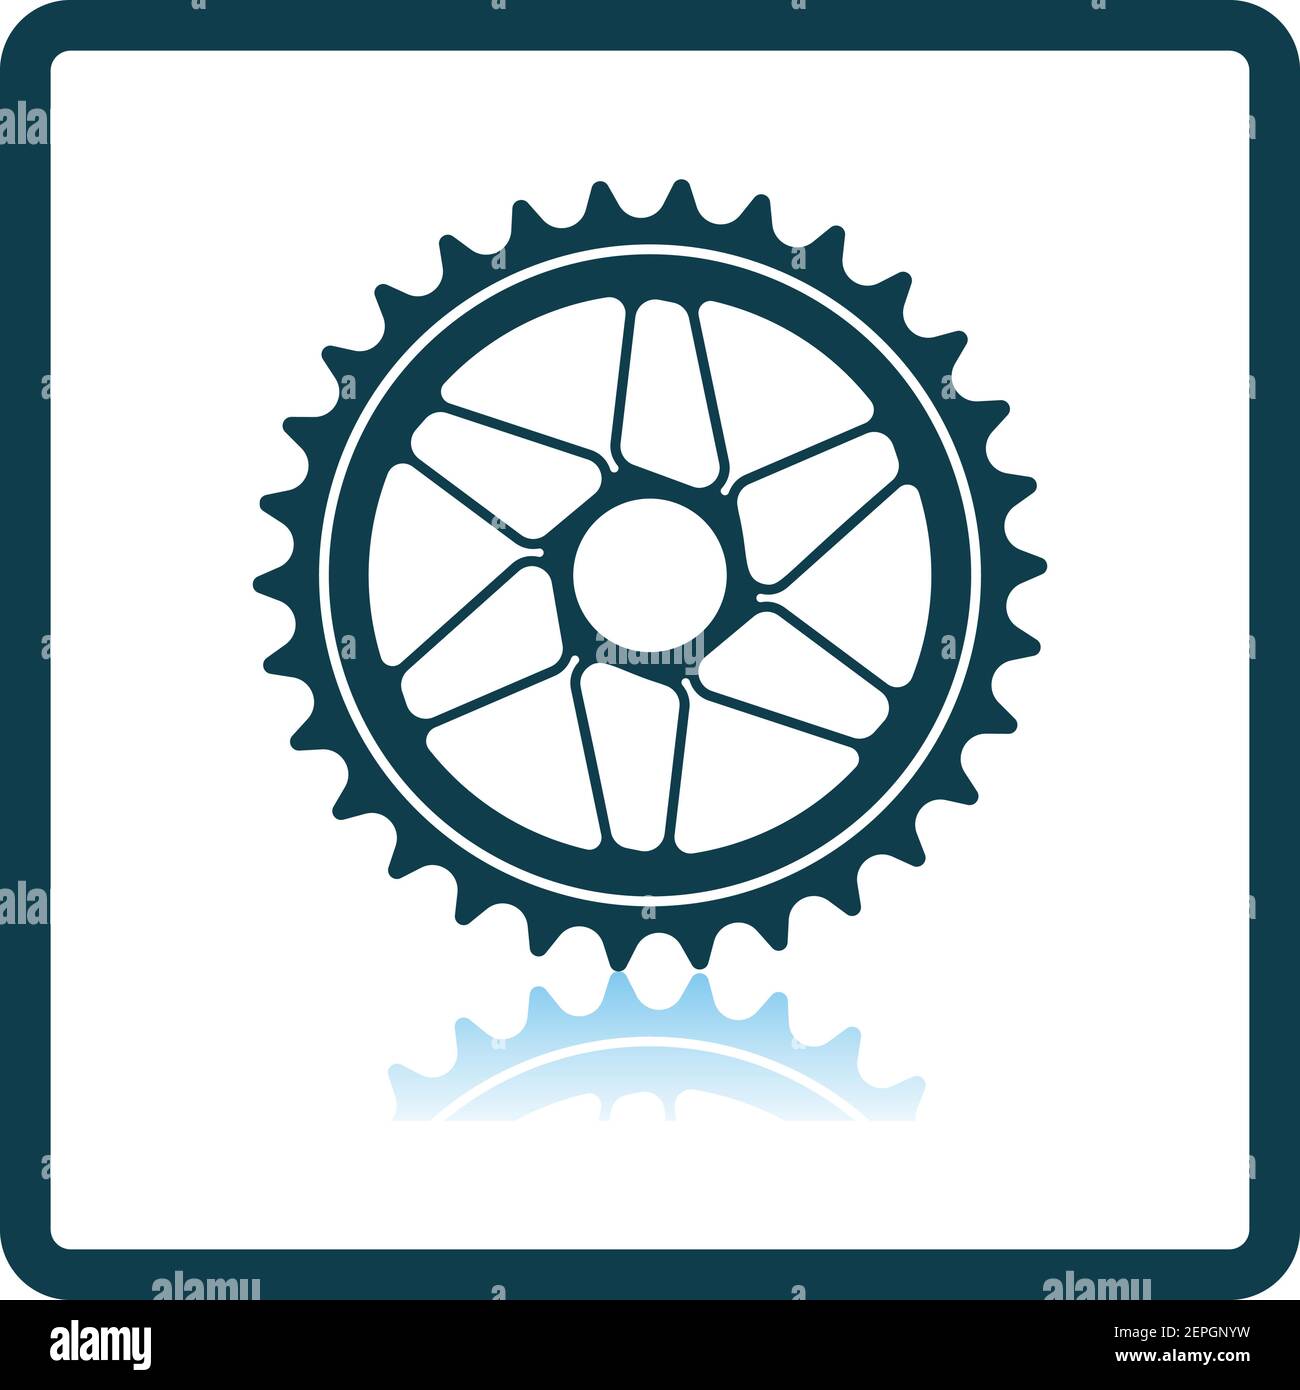 Bike Gear Star Icon. Square Shadow Reflection Design. Vector Illustration. Stock Vector